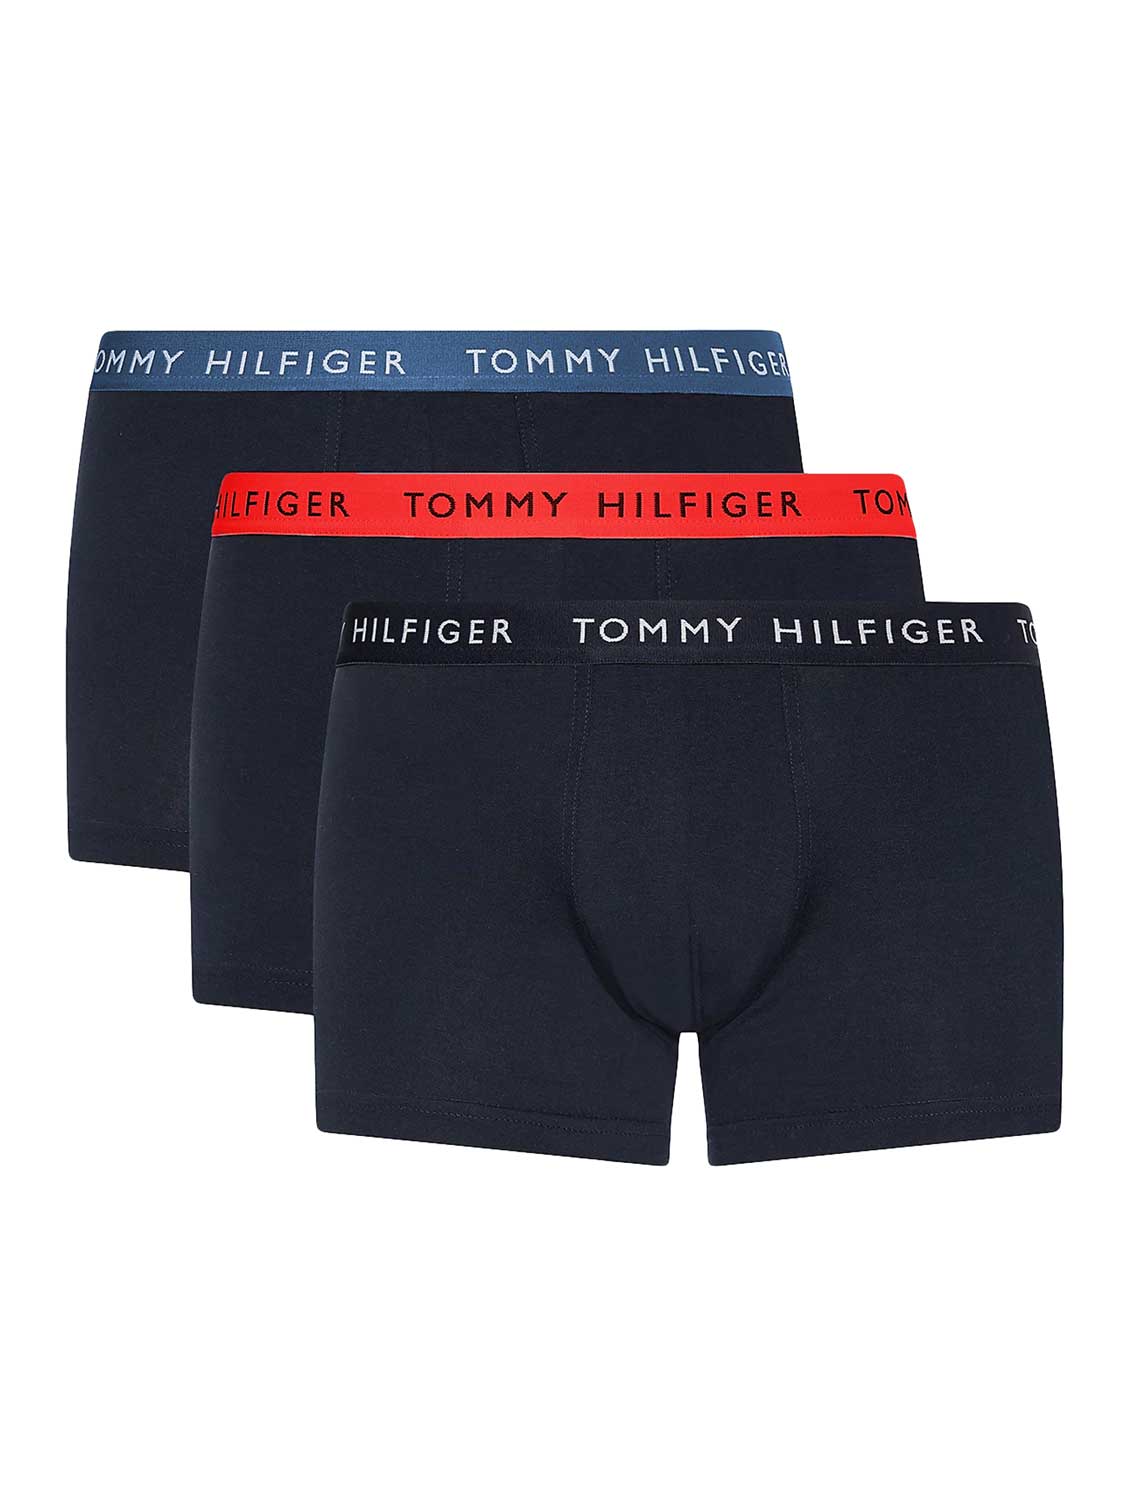 Tommy Hilfiger trunks (3-pack) - heren boxers normale lengte - blauw met gekleurde tailleband -  Maat: M